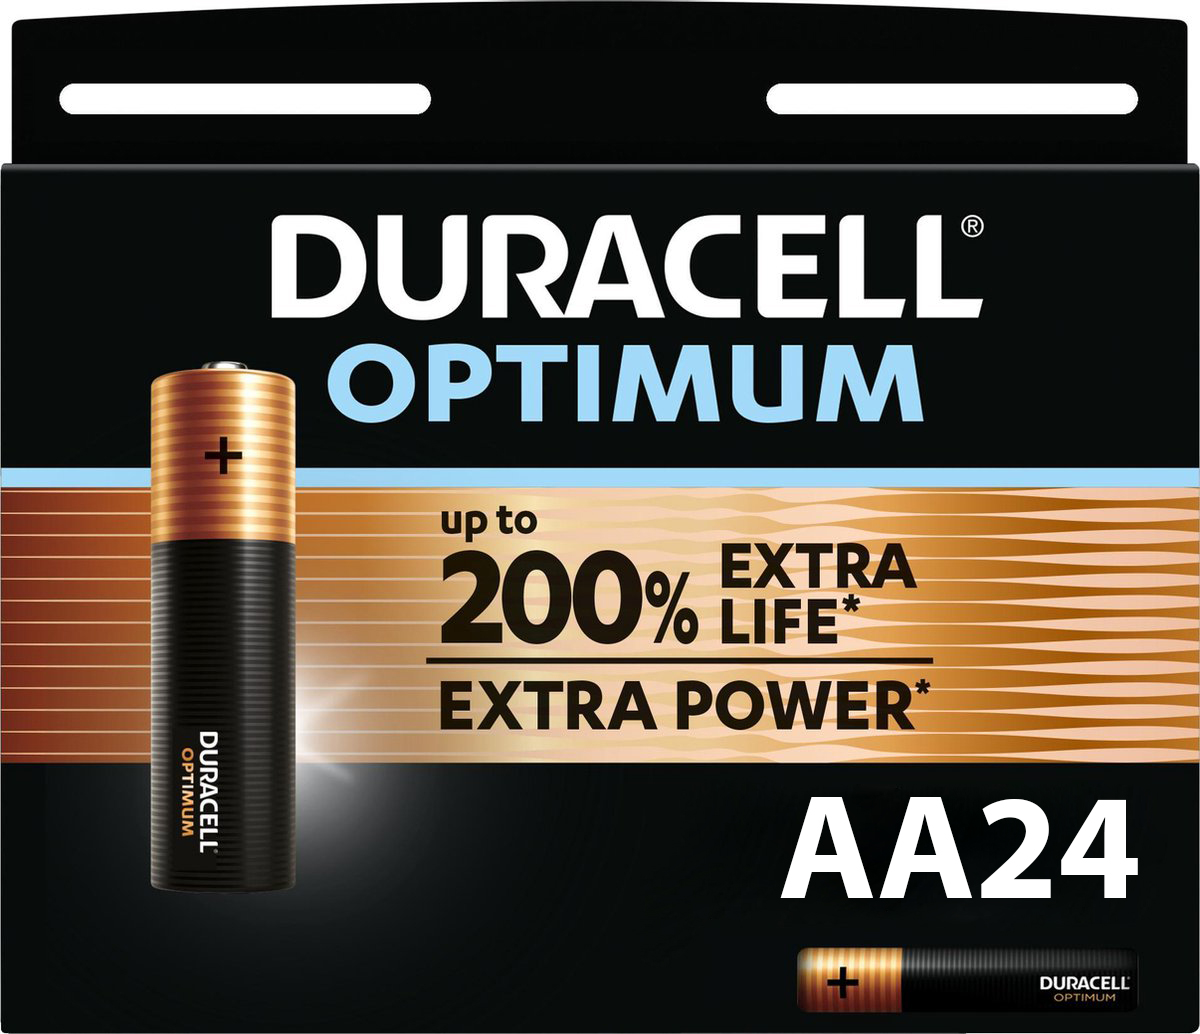 Duracell Optimum AA batterijen - 24 stuks | Saake-shop.be